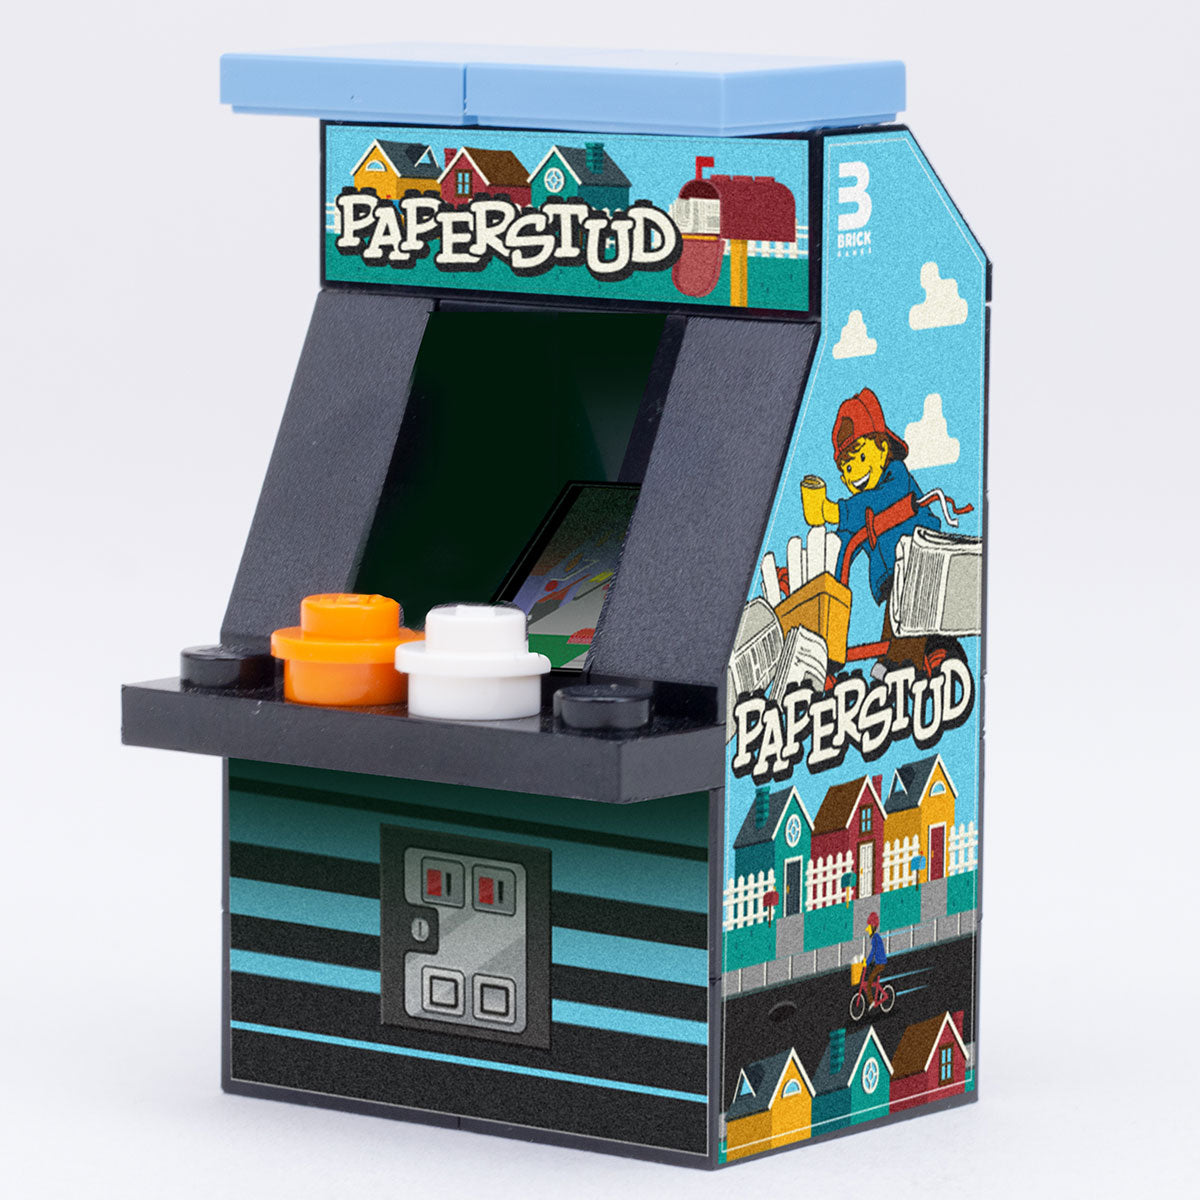 Paper Stud - B3 Customs Arcade Machine